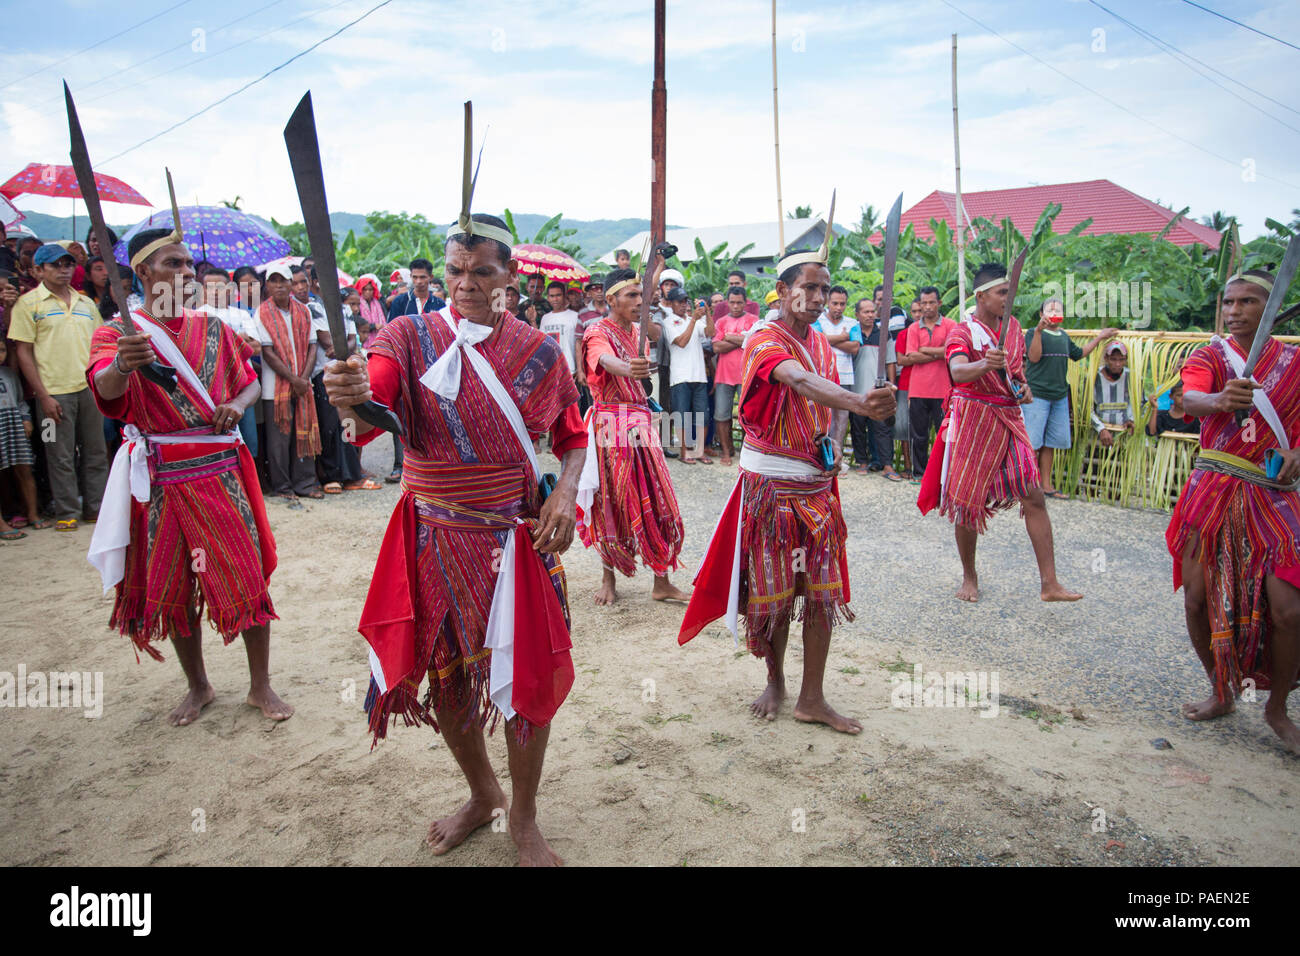 Leti Islands festive and cultural celebrations, Indonesia Stock Photo